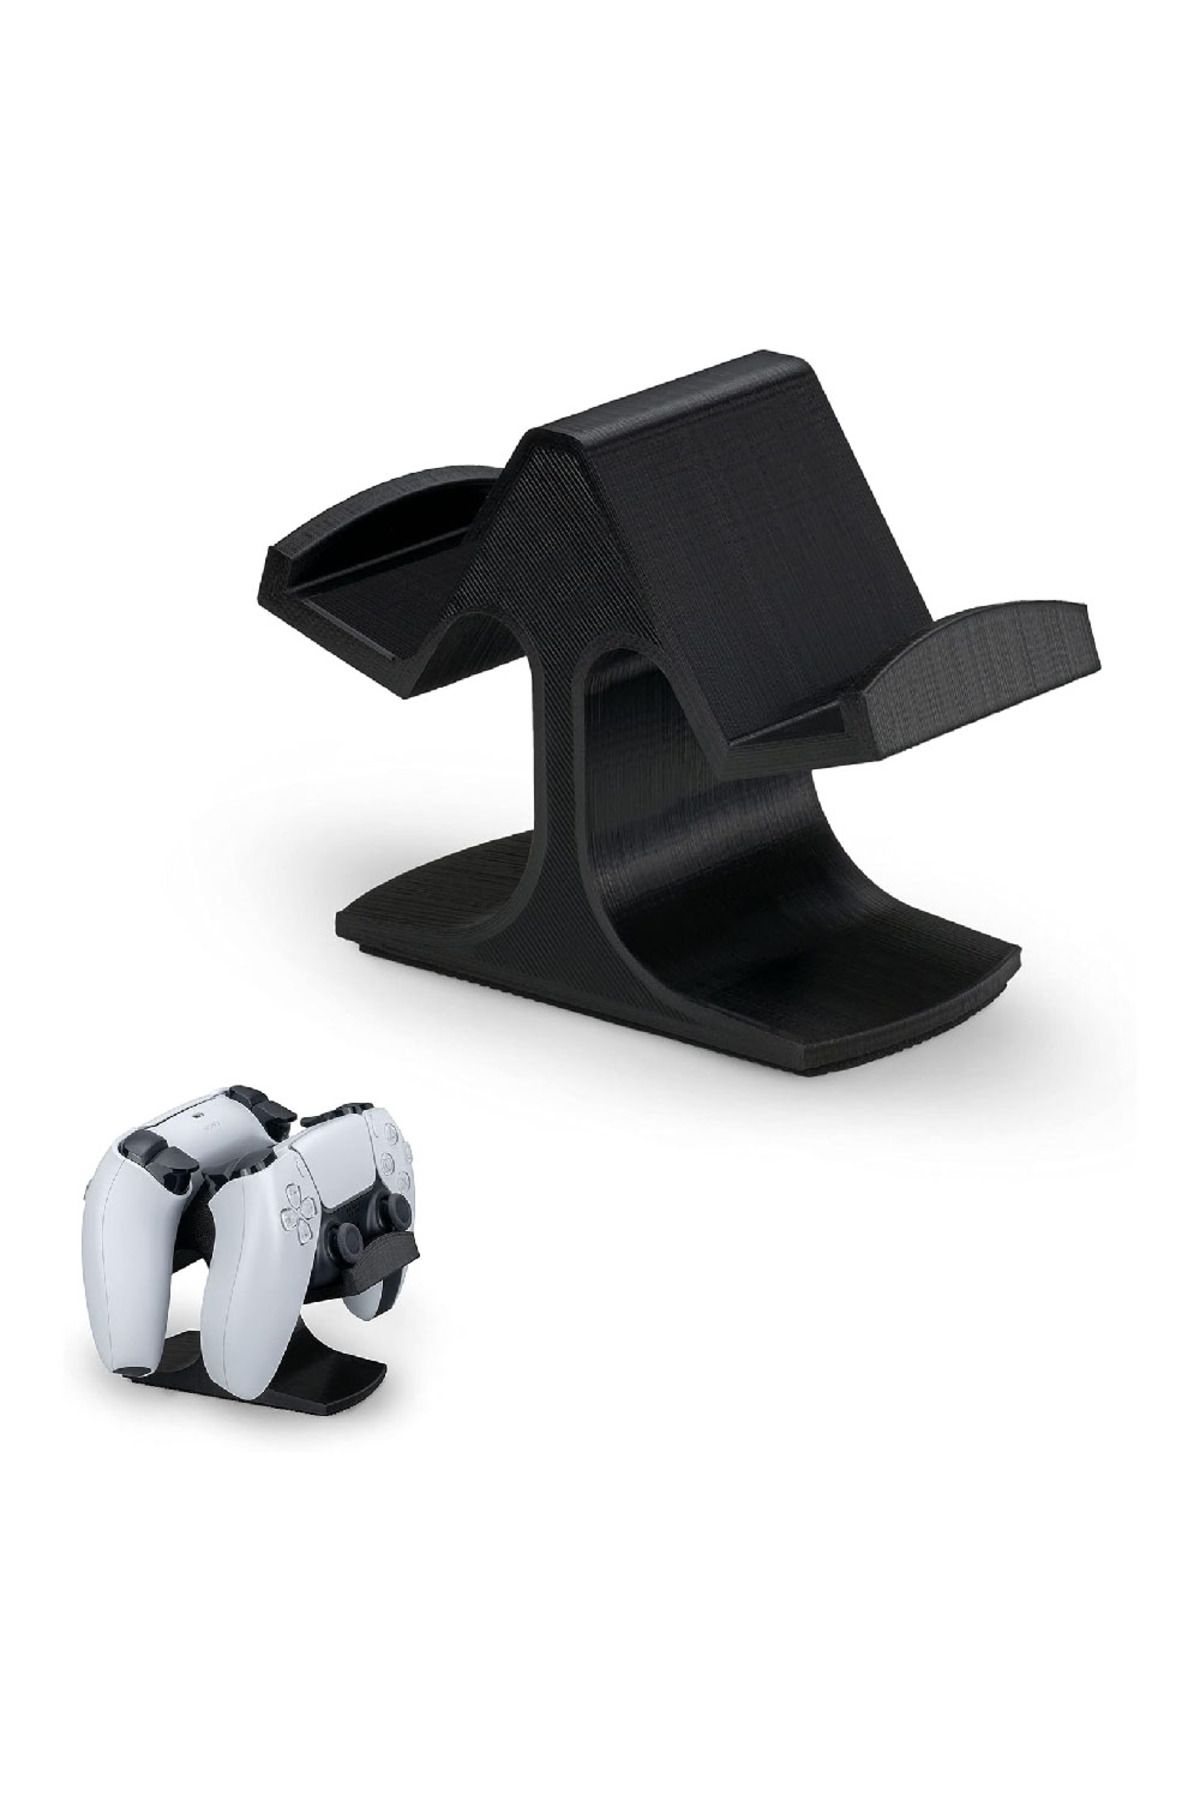 Yeniliko Çift Oyun Kumanda Standı - İkili Stand - Xbox ONE, PS5, PS4, PC, Steelseries, Steam Evrensel Tasarım